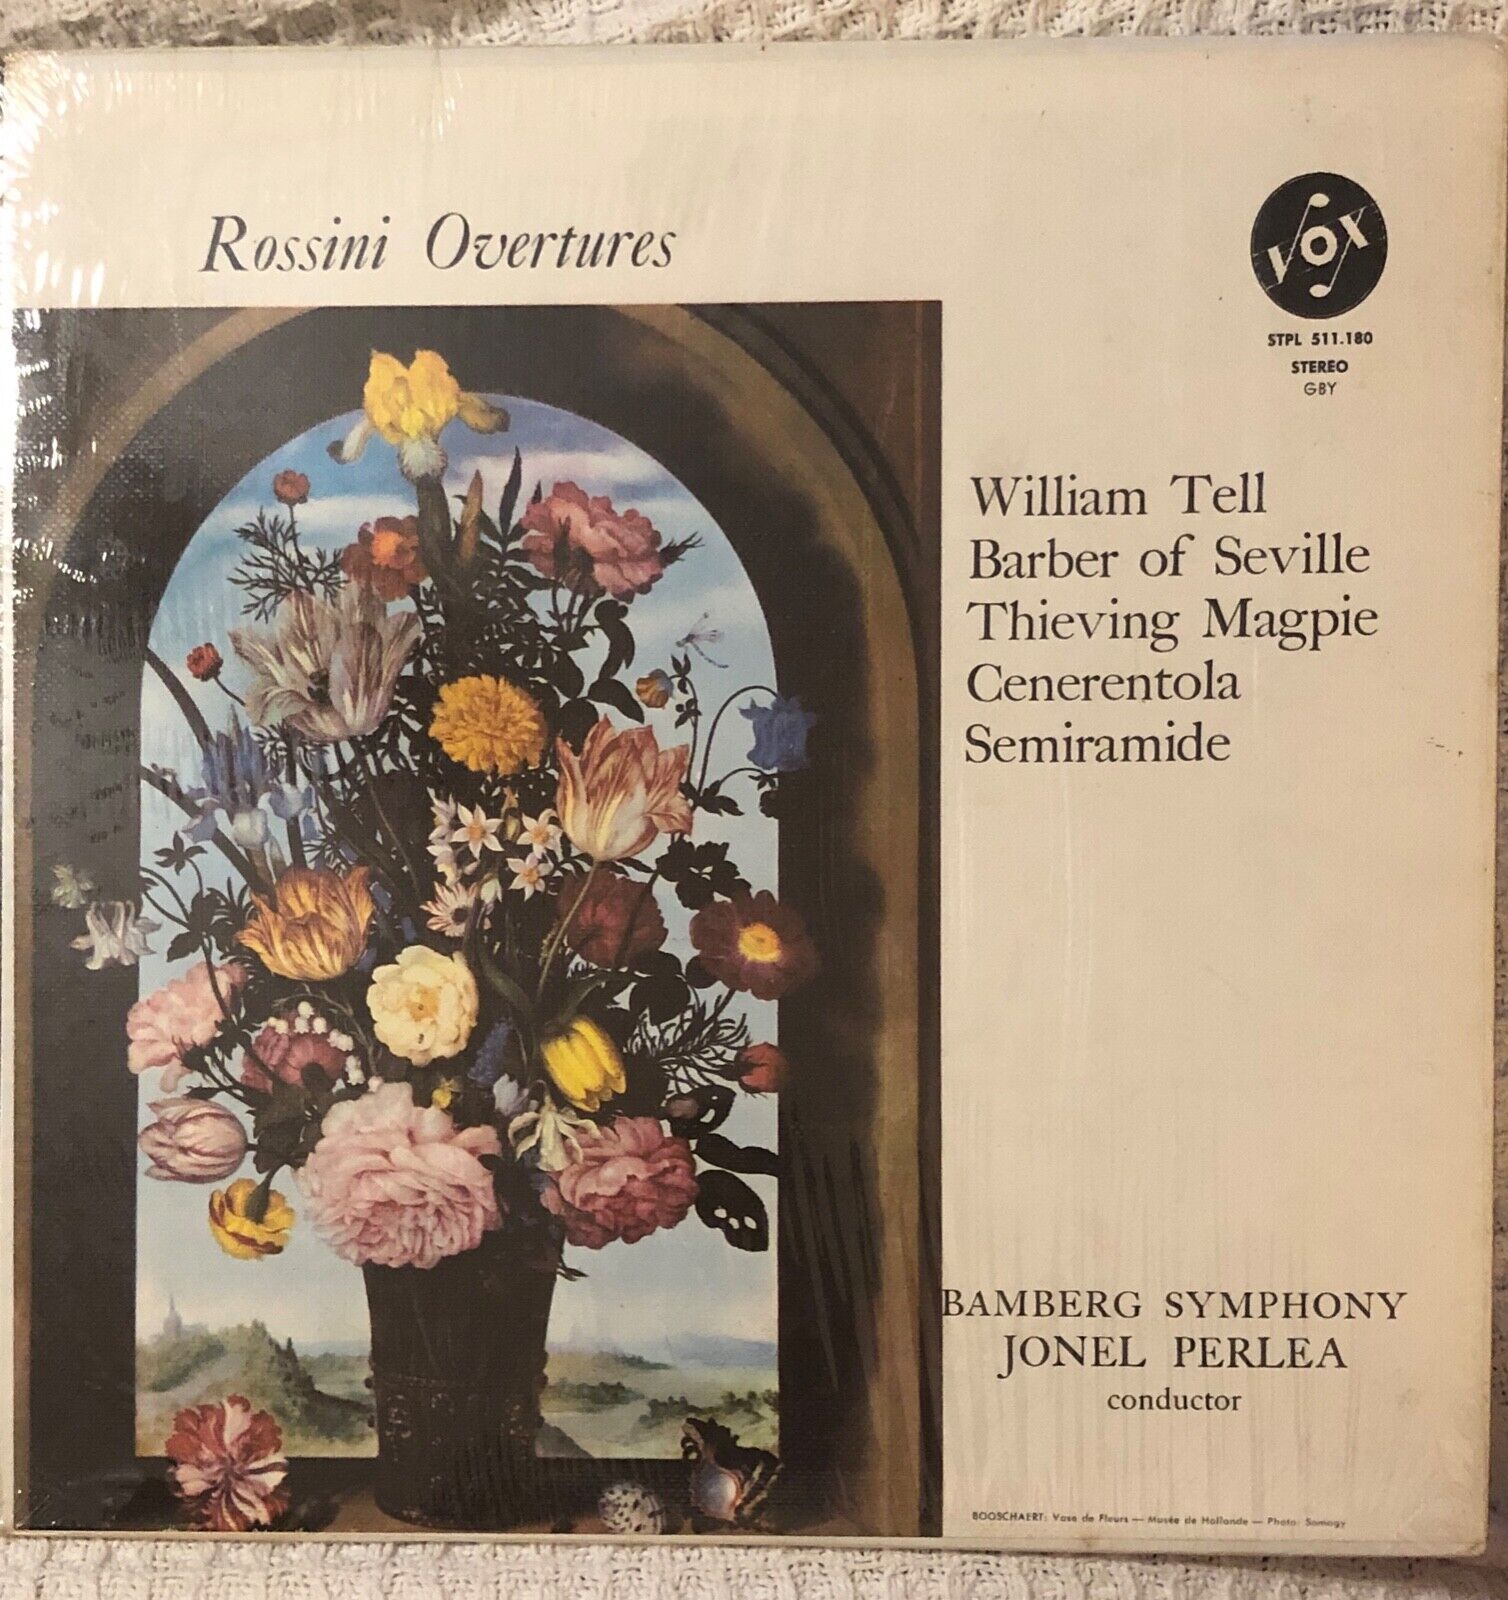 Vintage 1959 LP Rossini Overtures Bamberg Symphony Perlea Vox Stereophonic Album